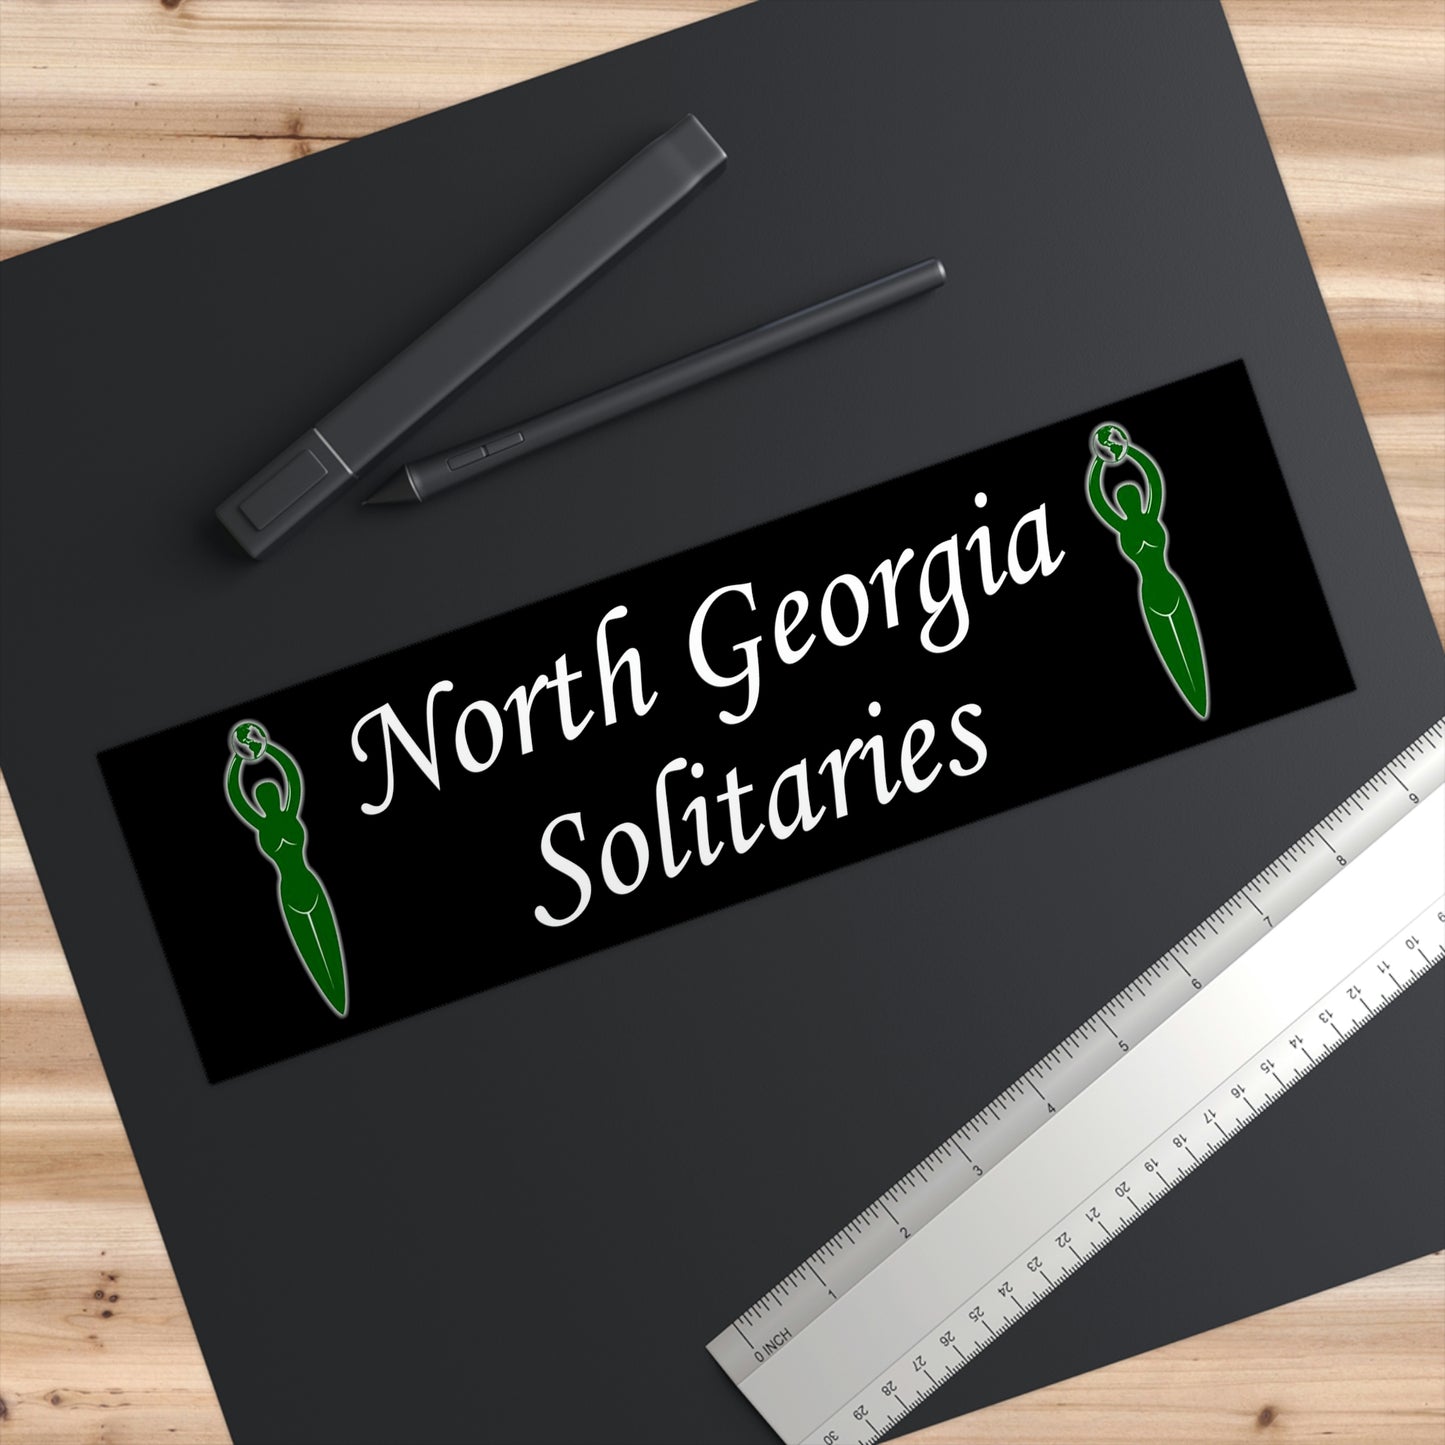 North Georgia Solitaries Bumper Sticker 3 sizes